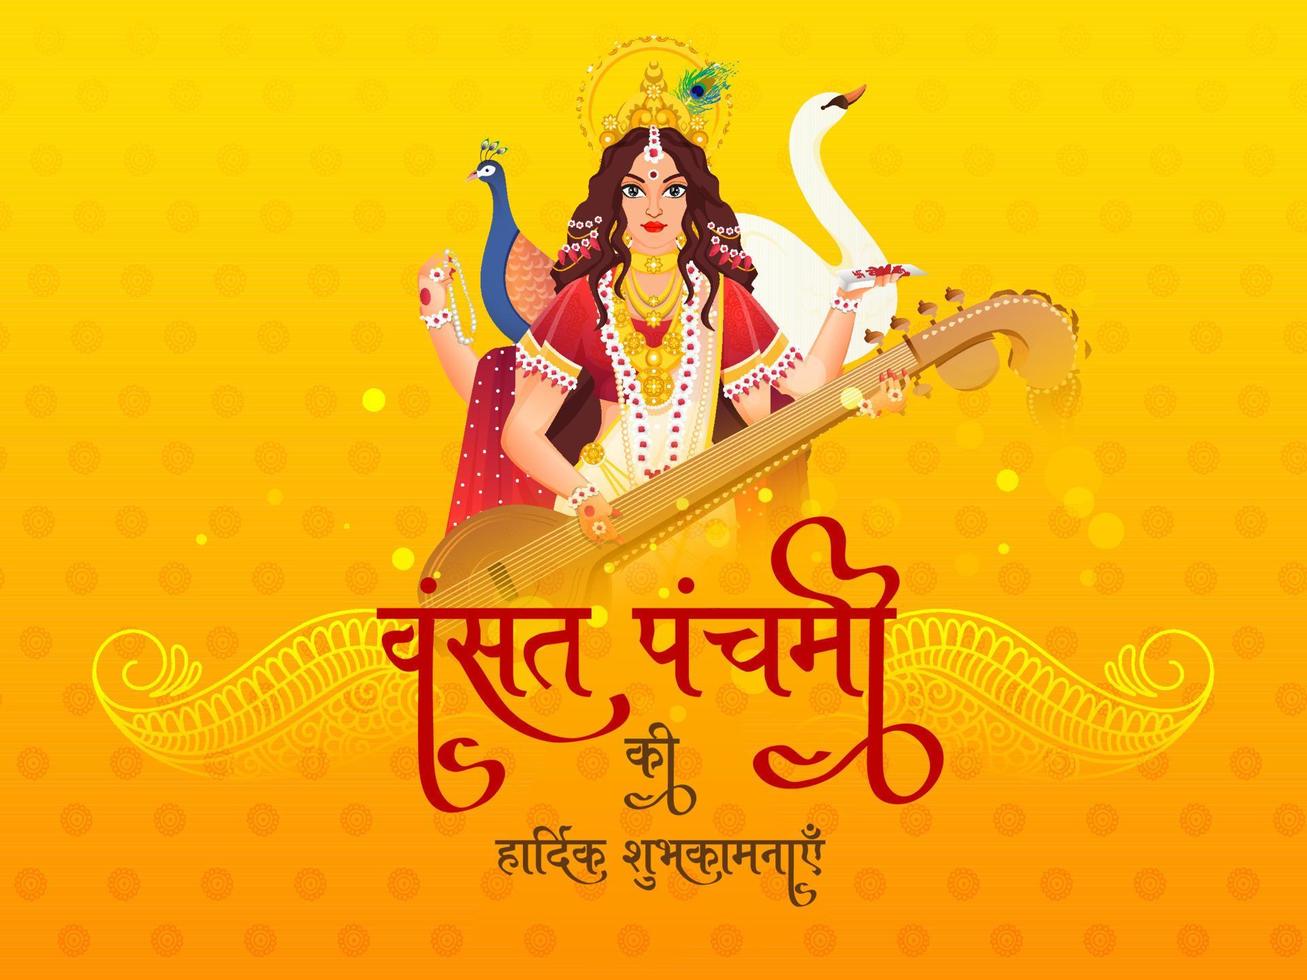 Hindi Text Best Wishes Of Vasant Panchami With Beautiful Goddess Saraswati Character, Swan And Peacock Bird On Yellow Background. vector